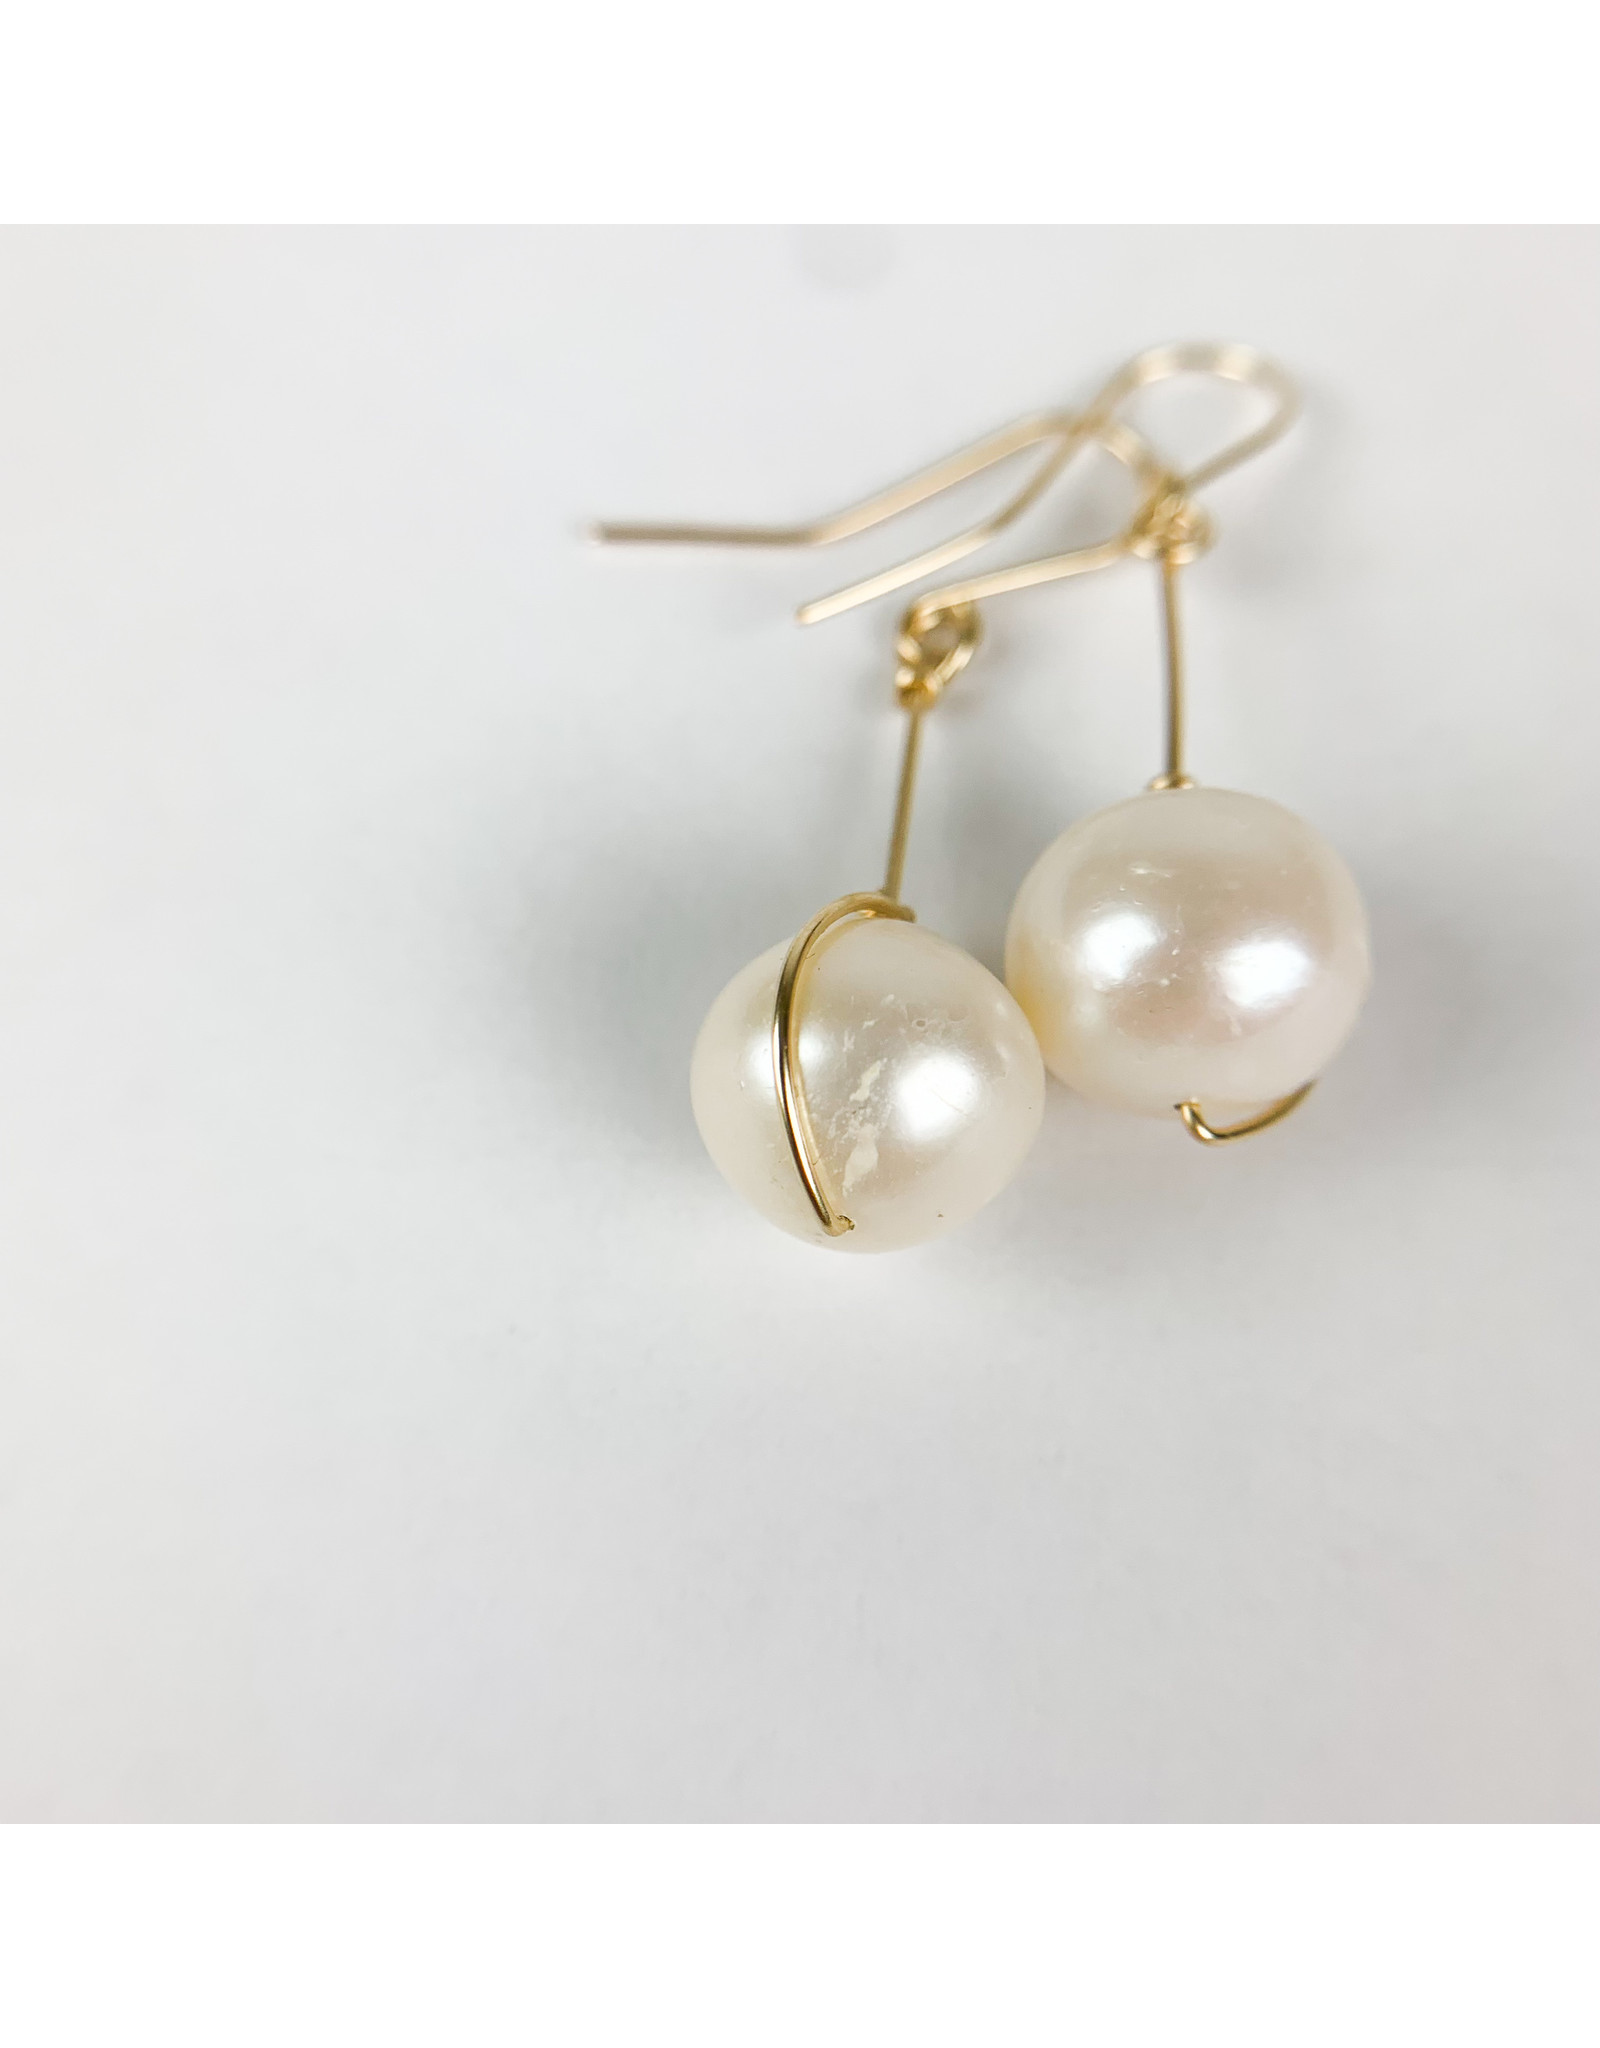 Nicole Collodoro Whitish Pearl Earrings - Gold